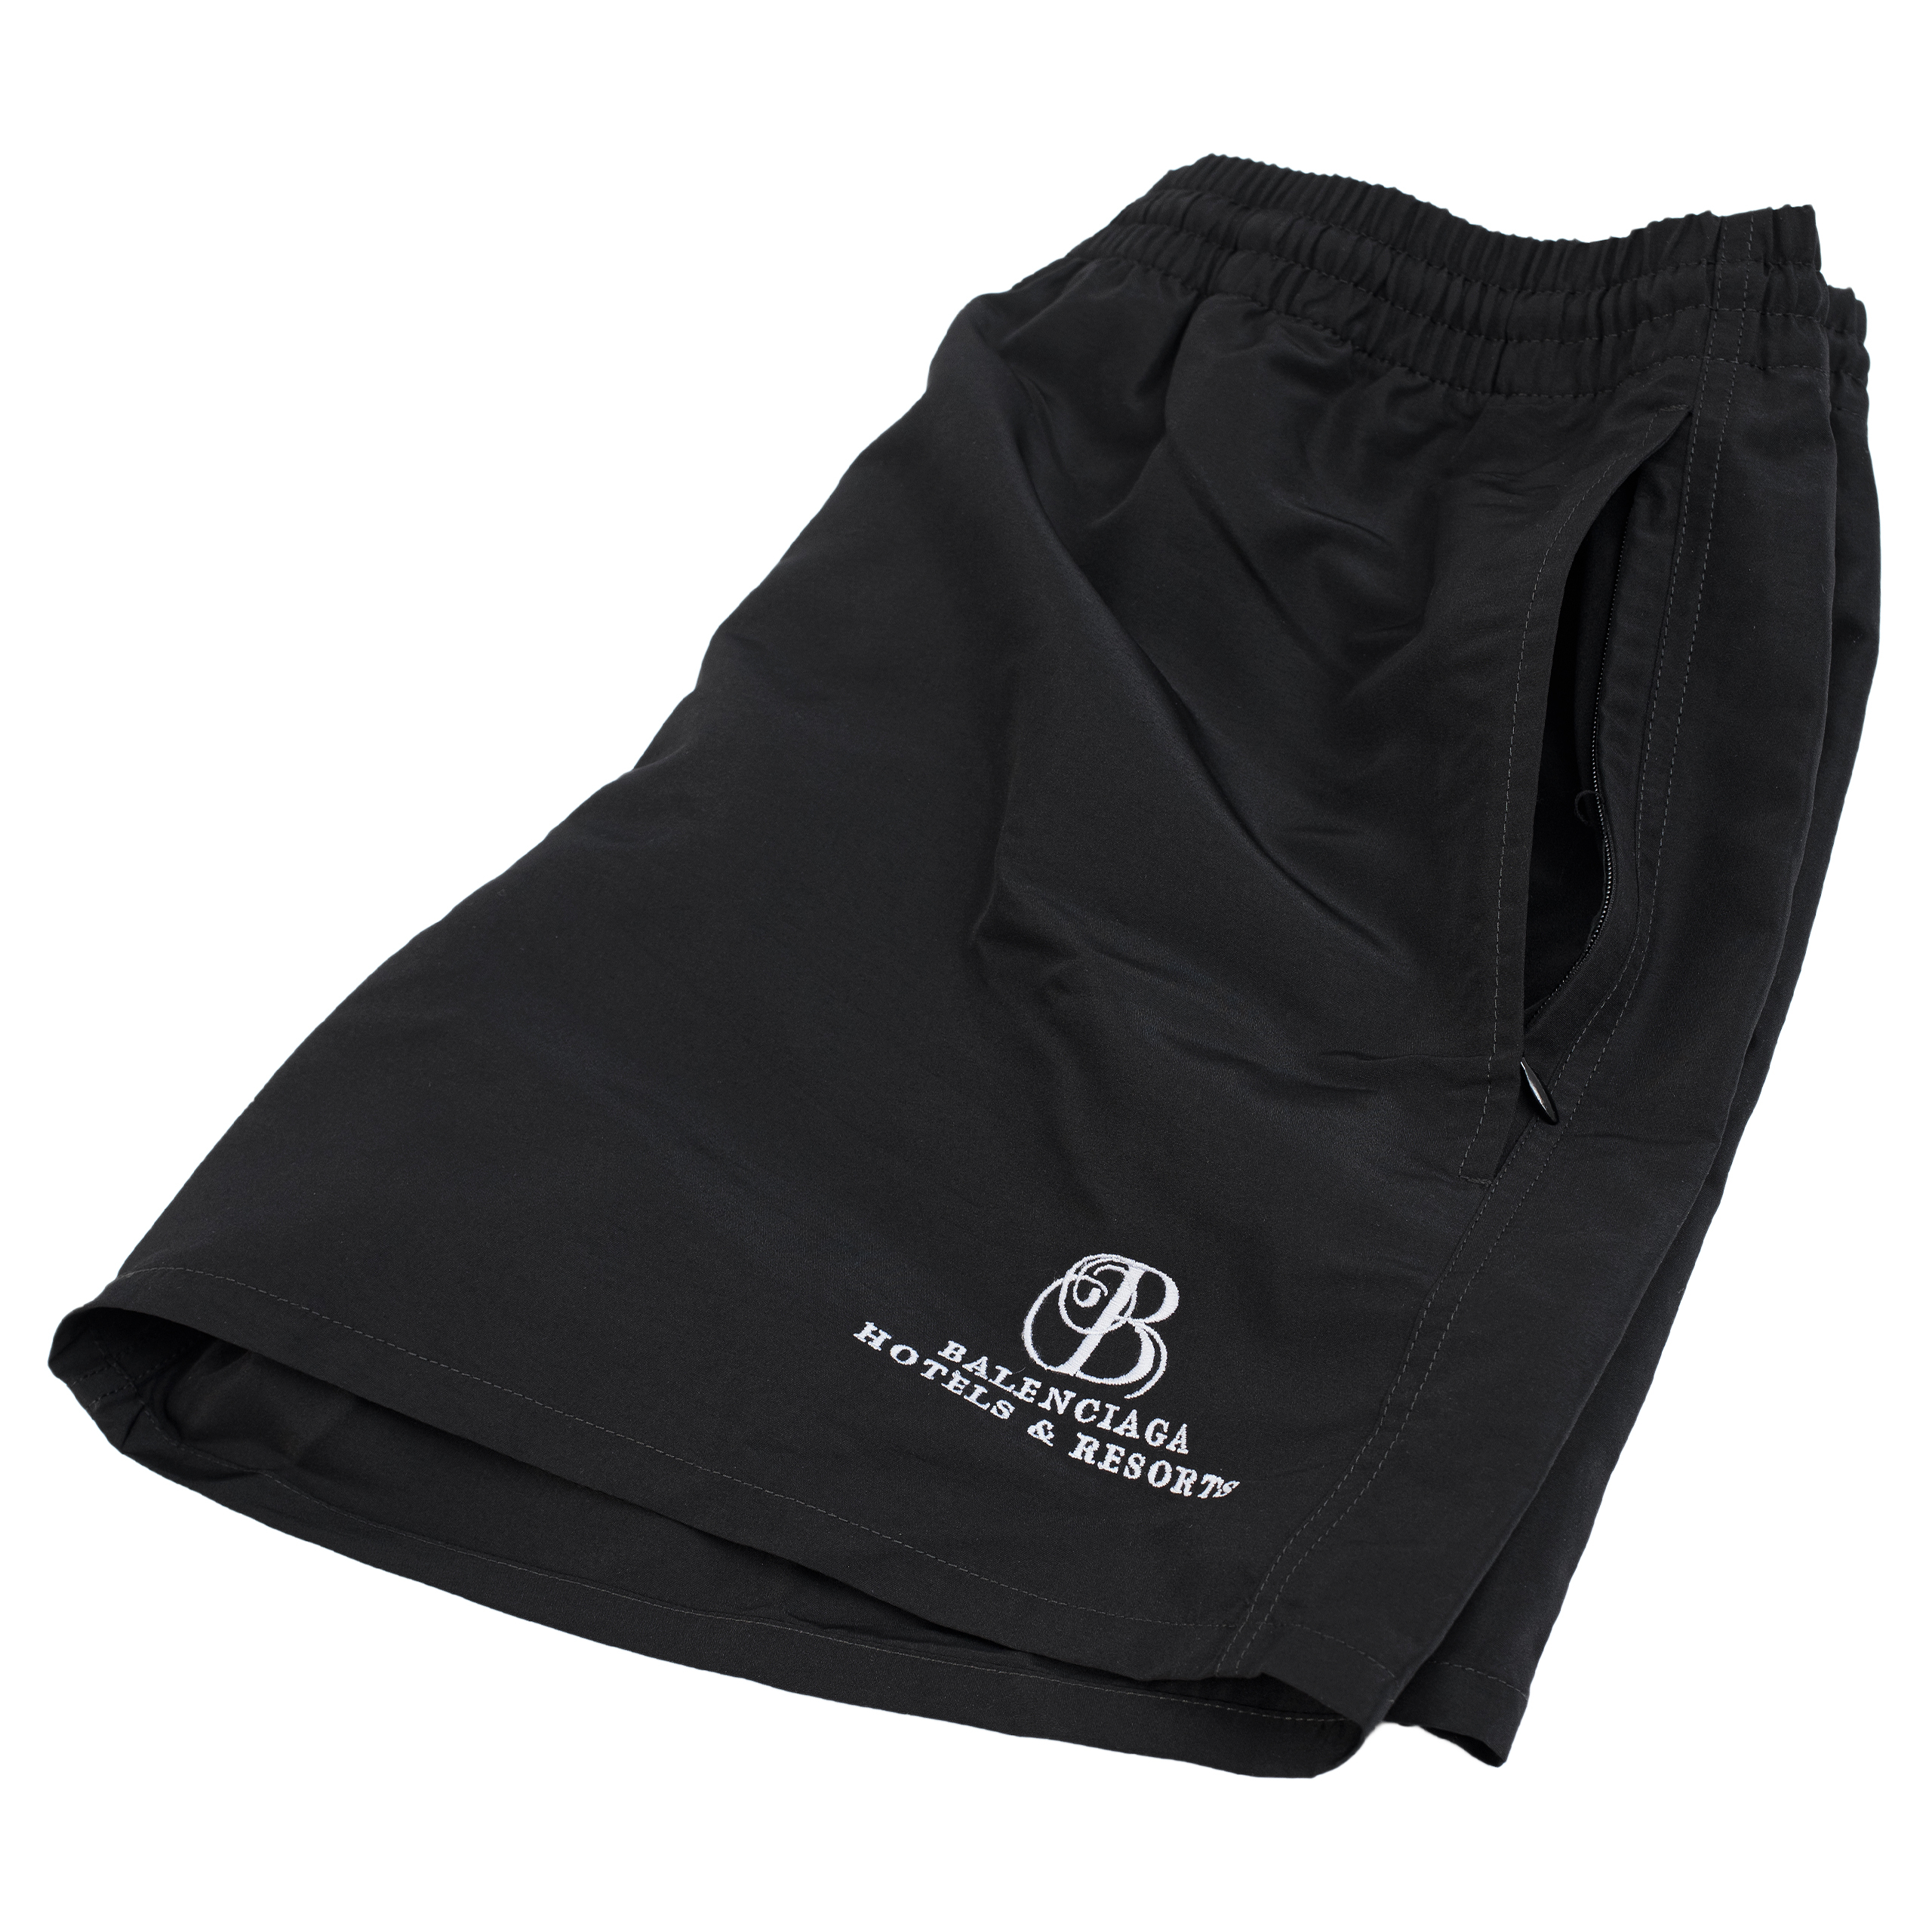 Черные плавки с вышивкой Balenciaga 657033/4A8B6/1000, размер L;M;S 657033/4A8B6/1000 - фото 2